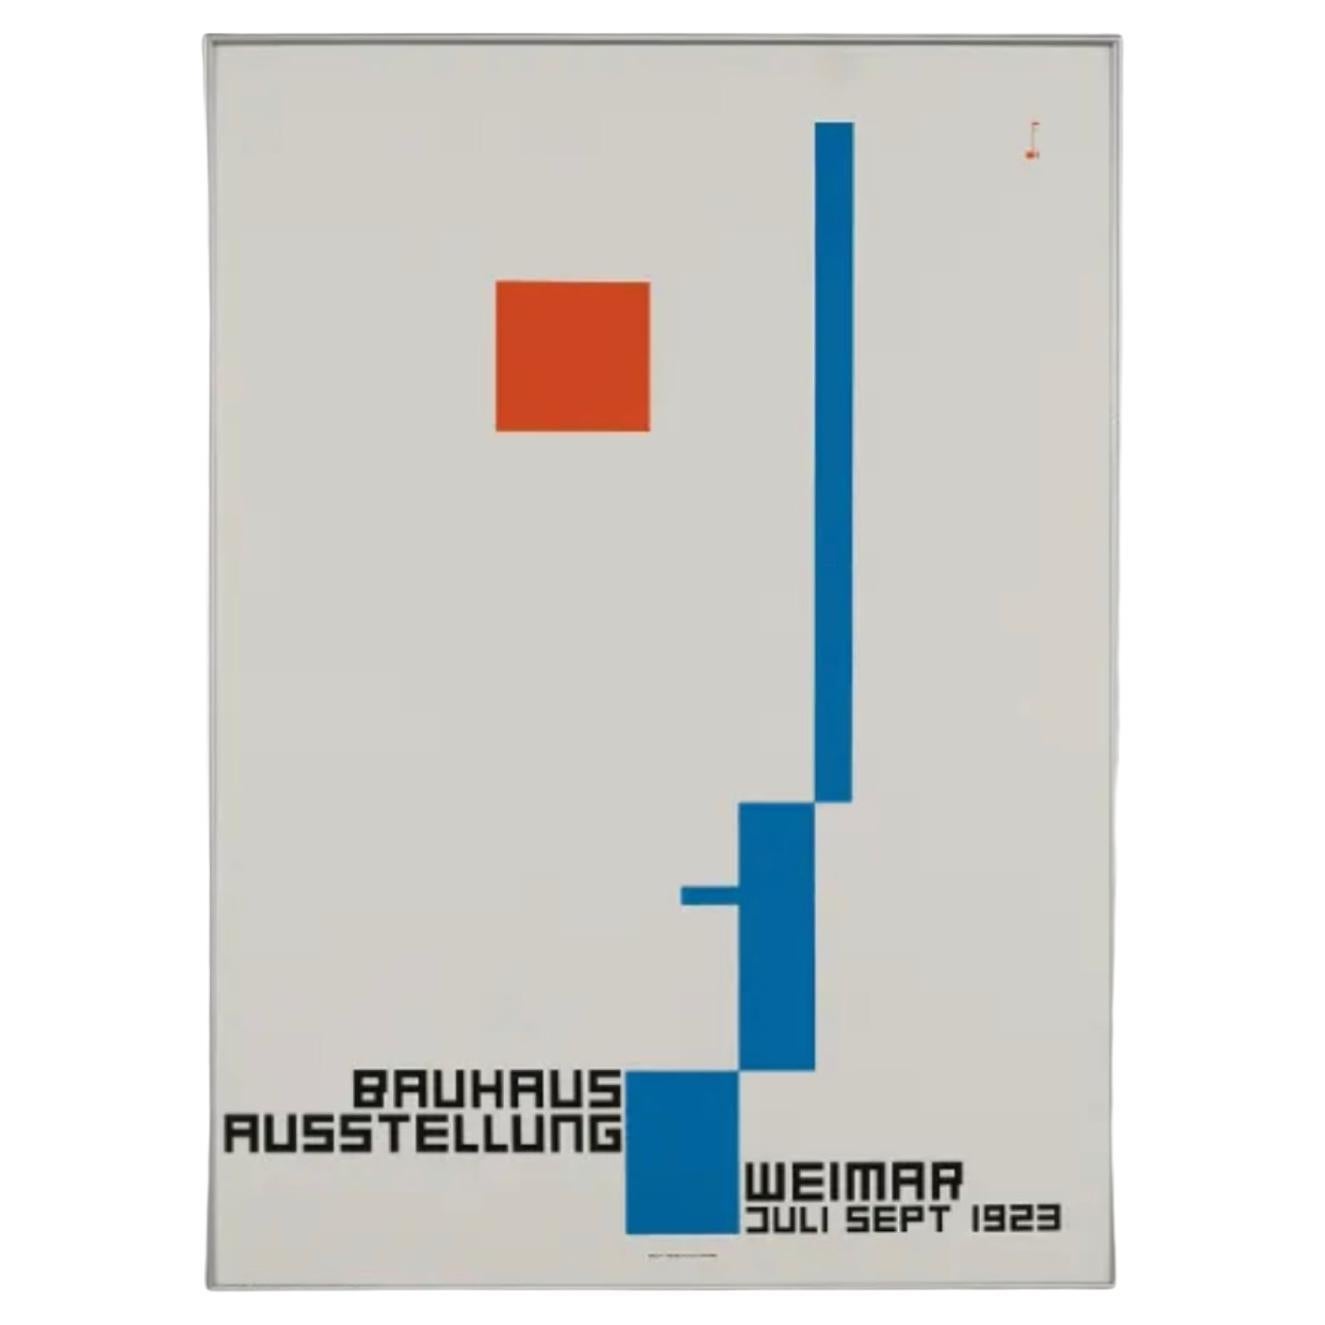 Fritz Schleifer, Bauhaus Ausstellung, 1923, Lithograph, Exhibition Print Weimar For Sale